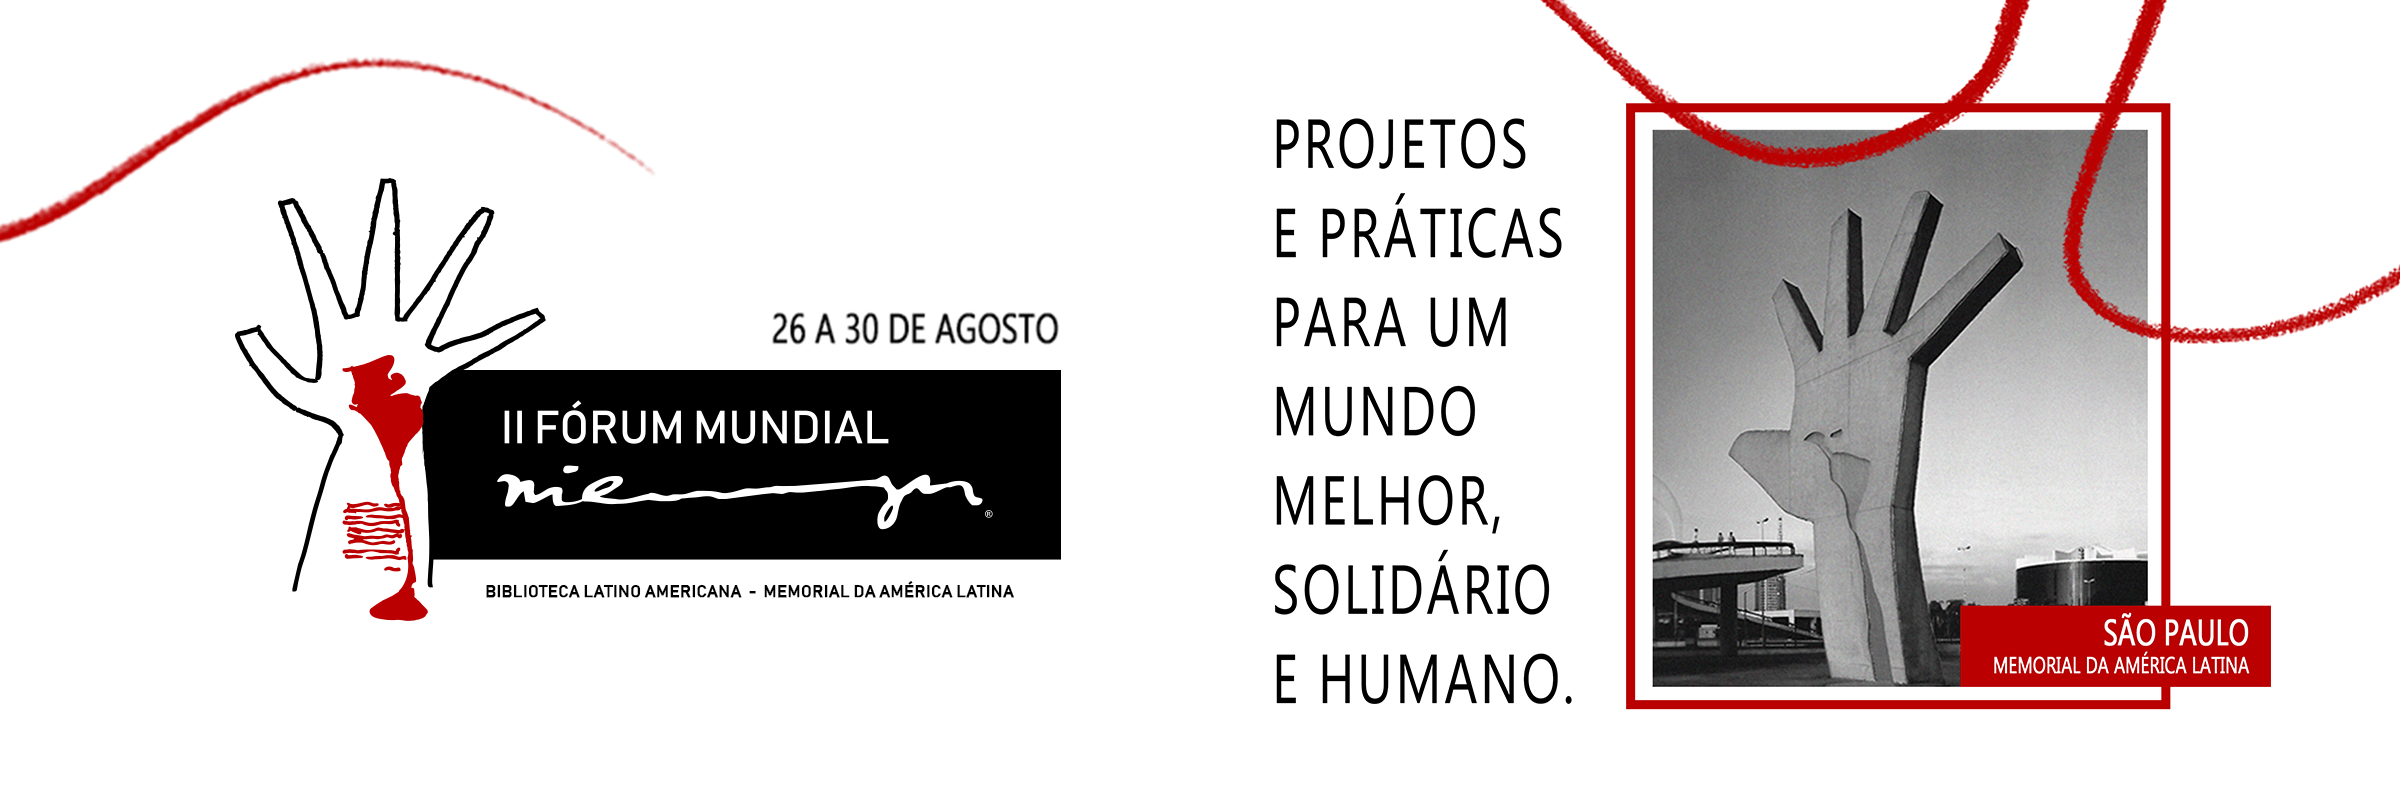 Banner Fórum Mundial Niemeyer